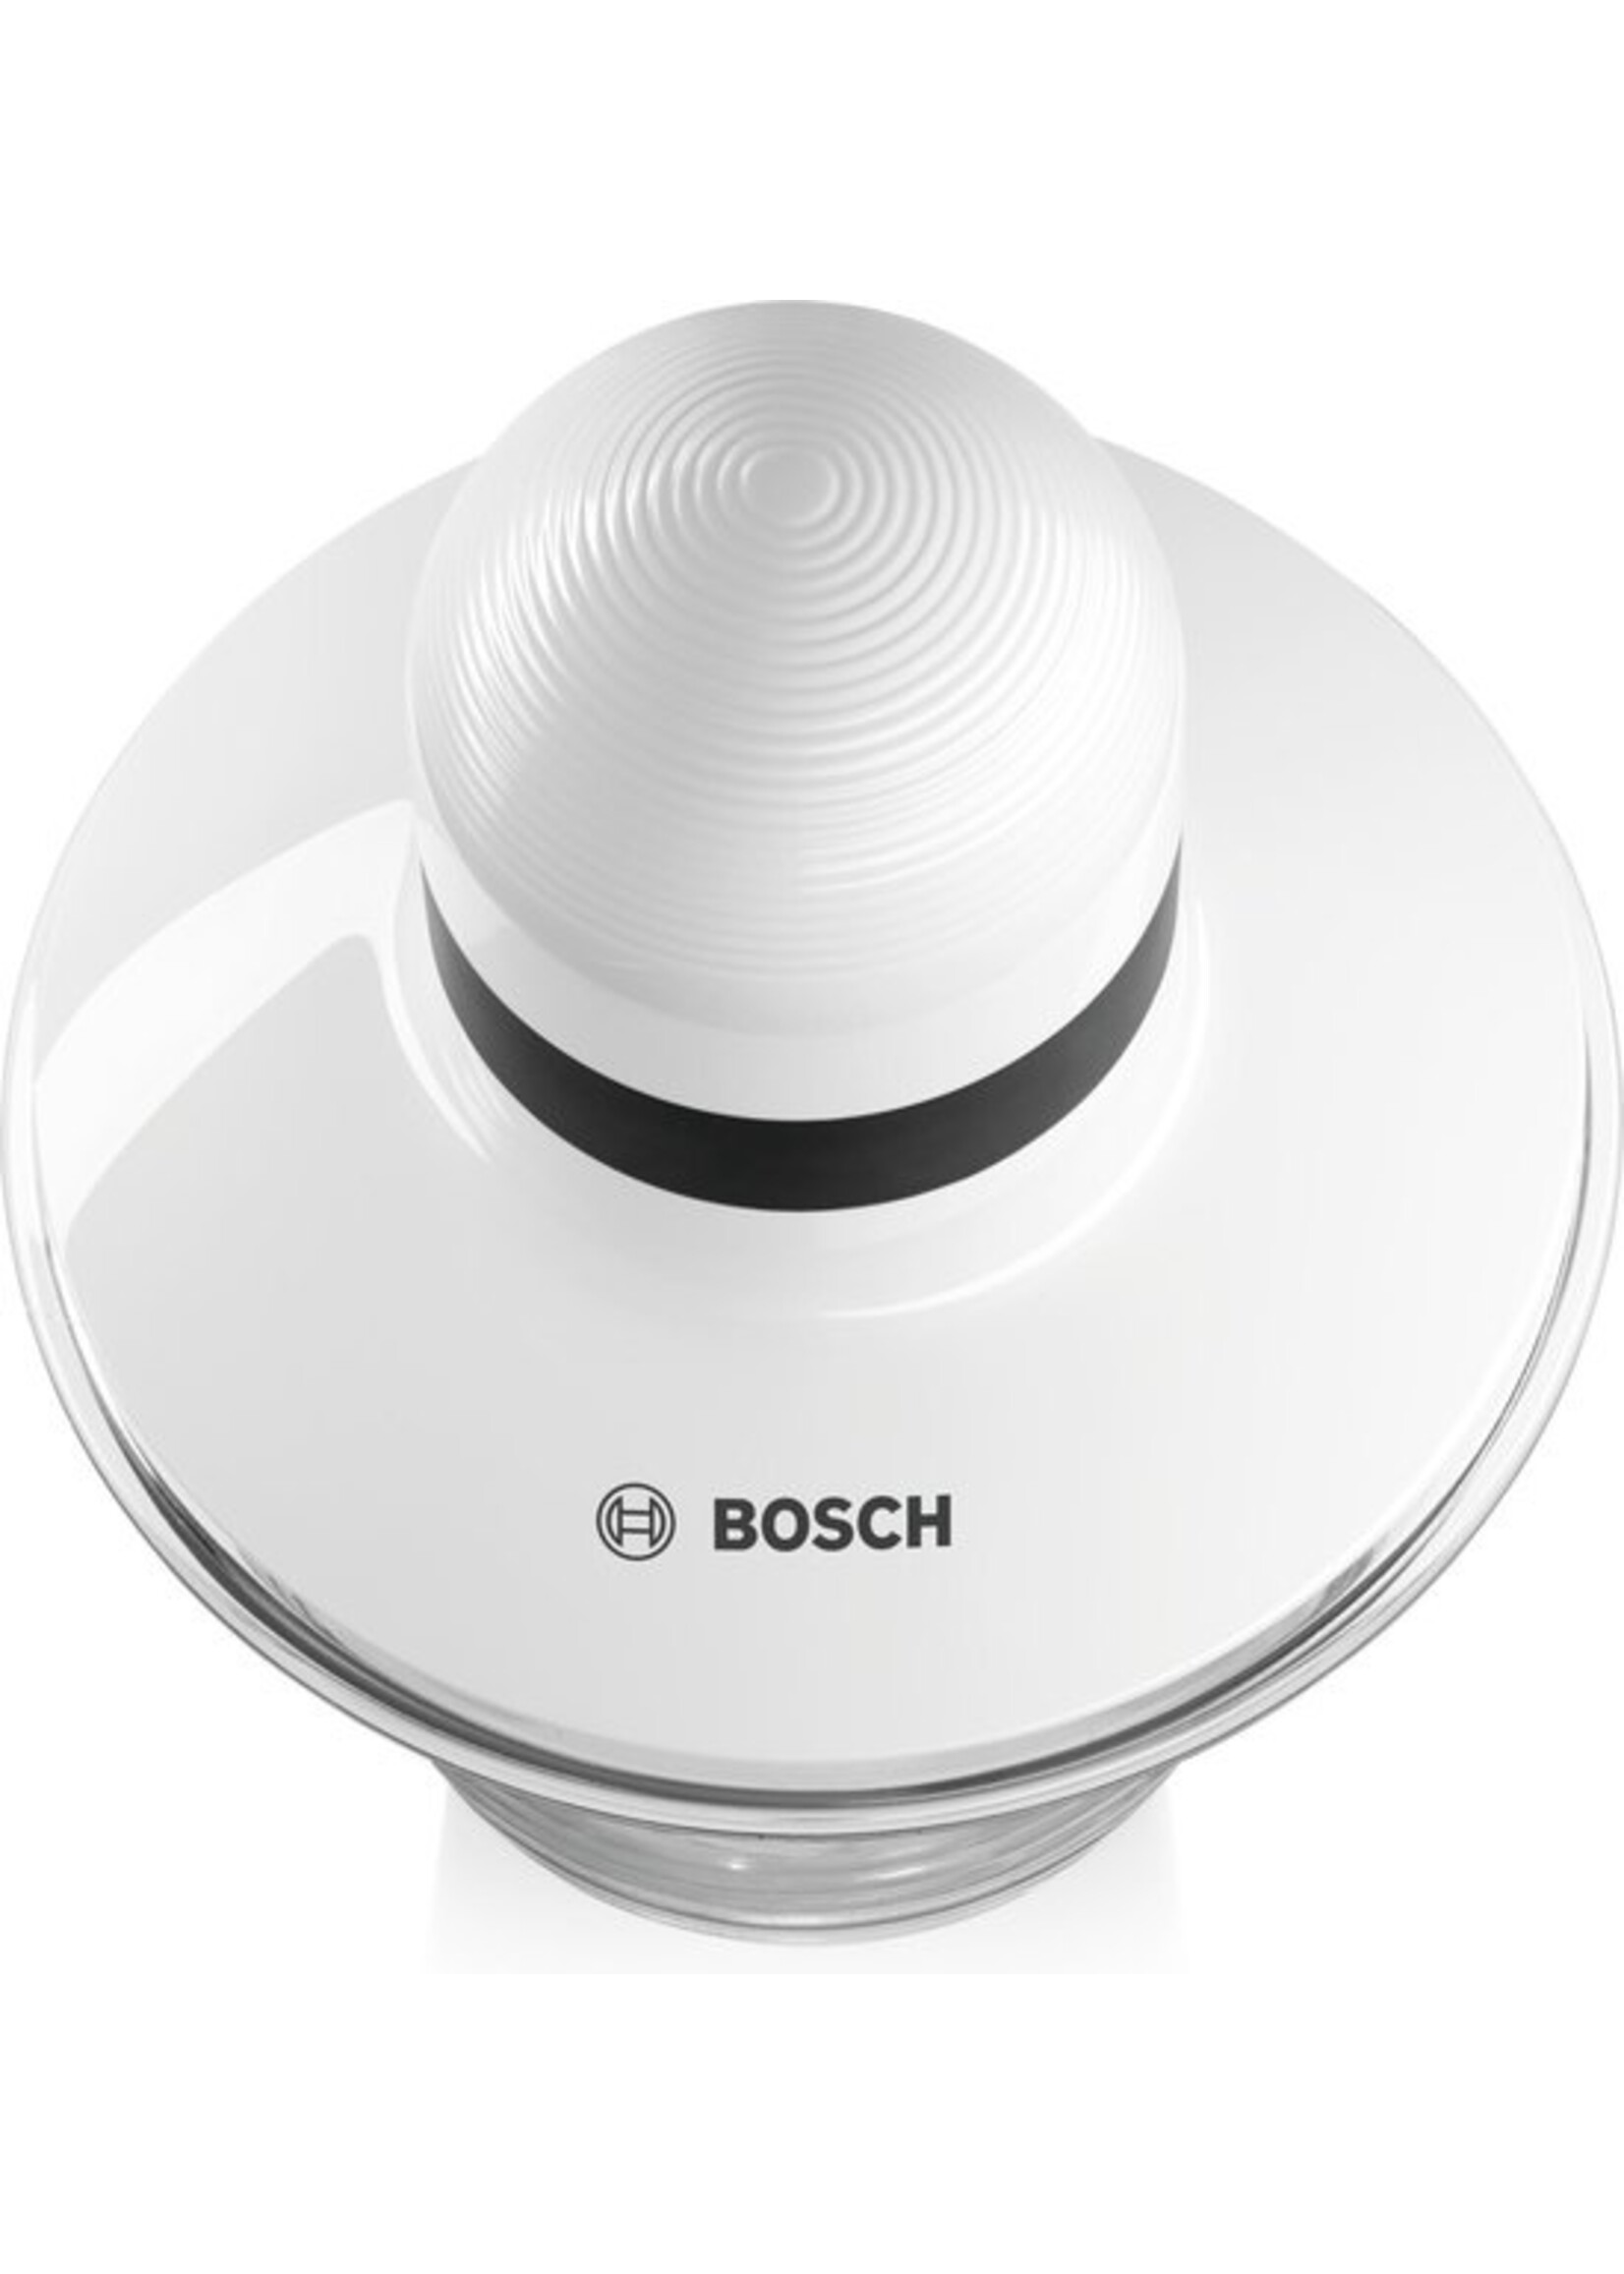 Bosch Bosch MMR08A1 - Hakmolen - Zwart/Wit koopjeshoek